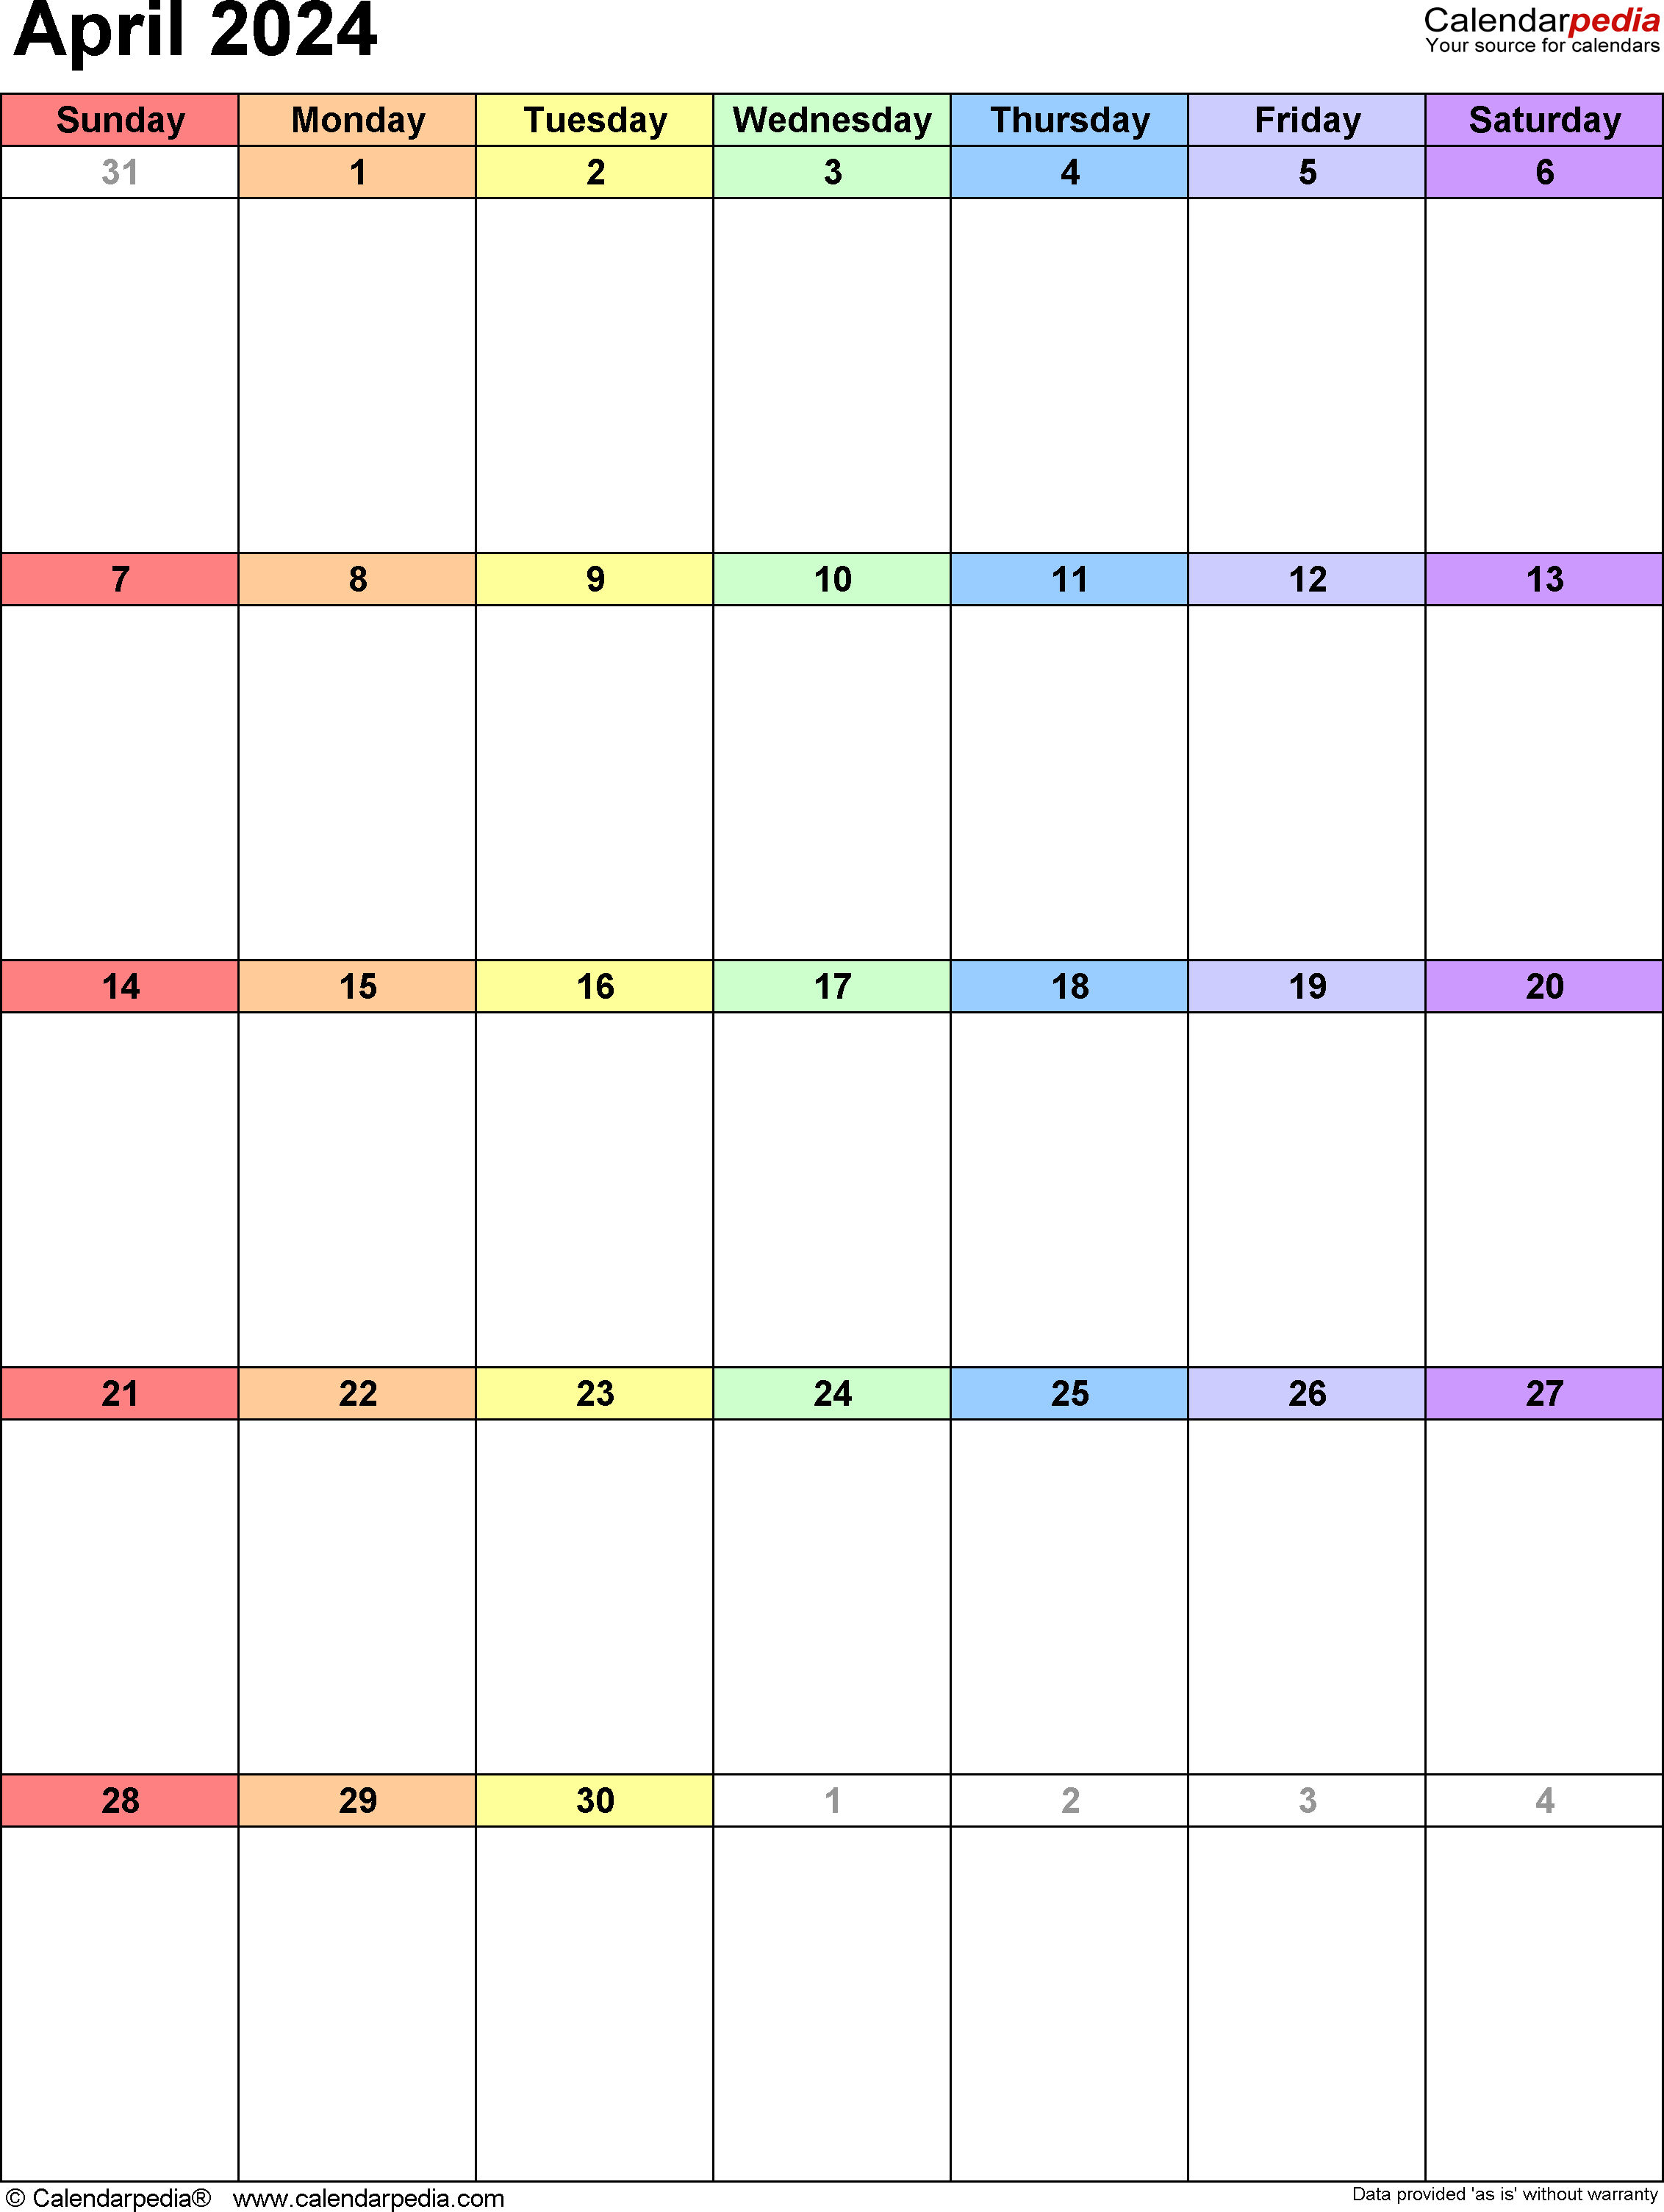 April 2024 Calendar | Templates For Word, Excel And Pdf regarding April 2024 Editable Calendar